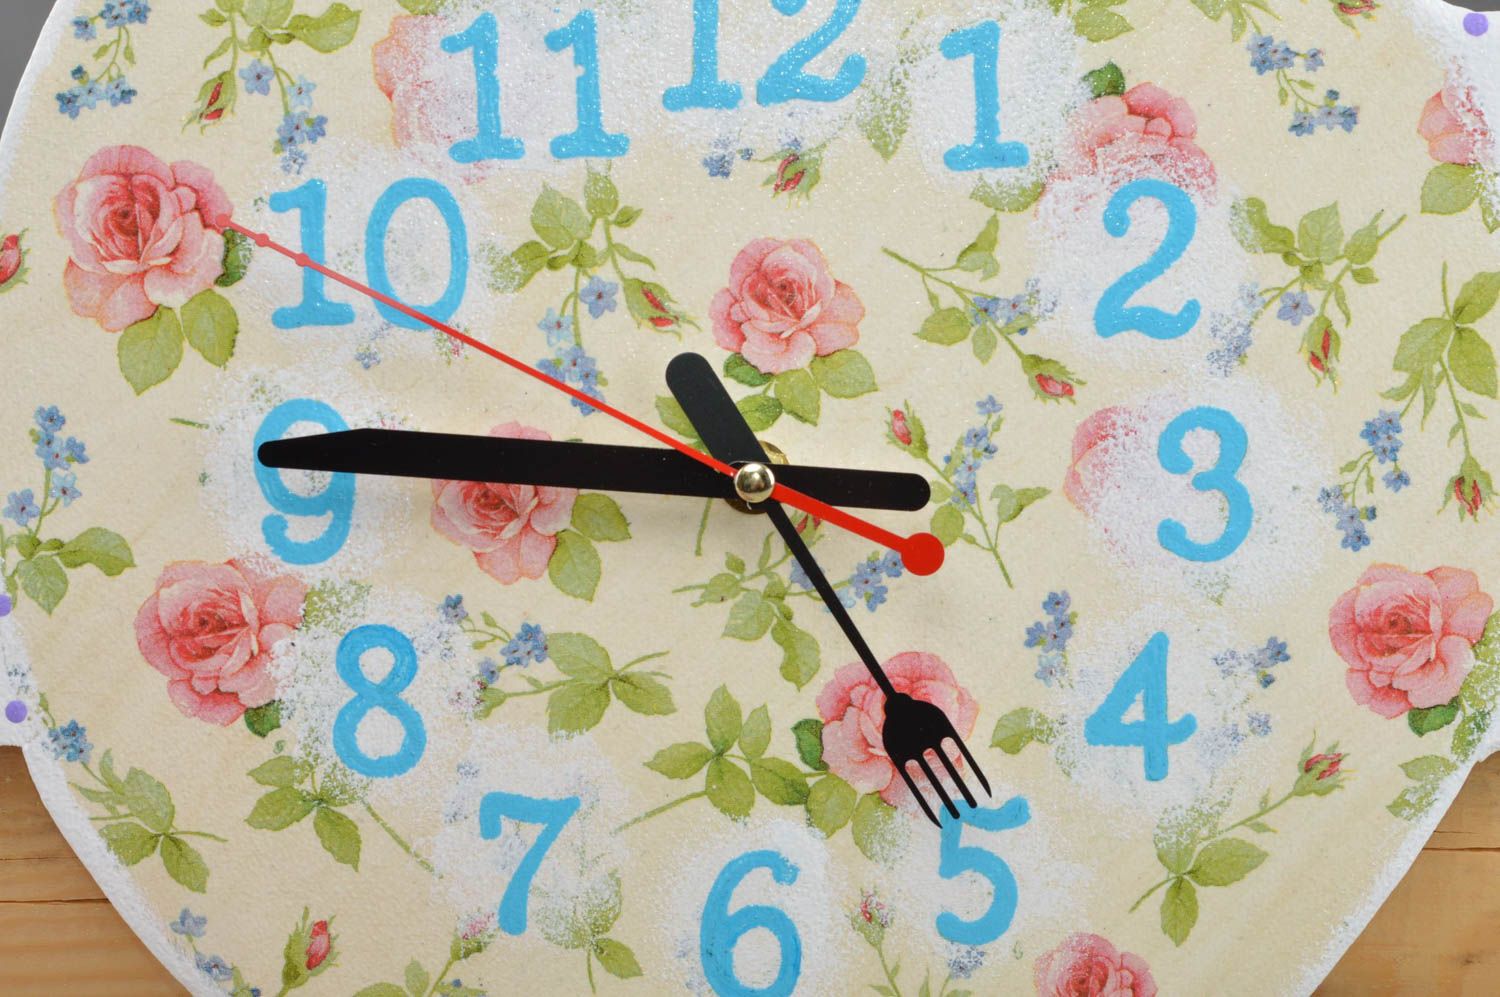 Handmade unusual clock wall clock for kitchen stylish painted wall decor photo 2